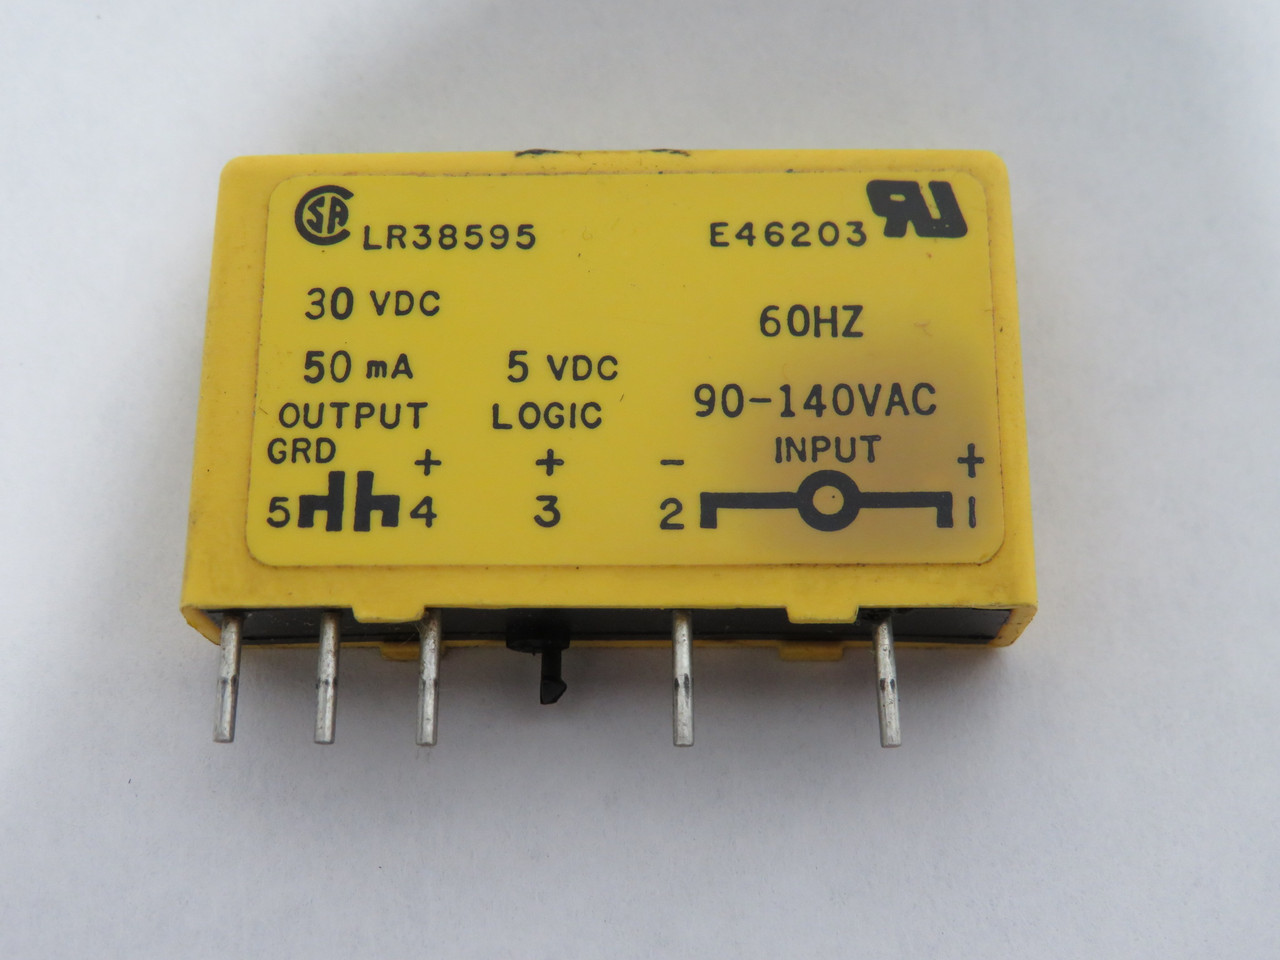 Gordos SM-IAC5 I/O Relay Module 30VDC@50mA 5VDCLogic 90-140VAC@60Hz Input USED